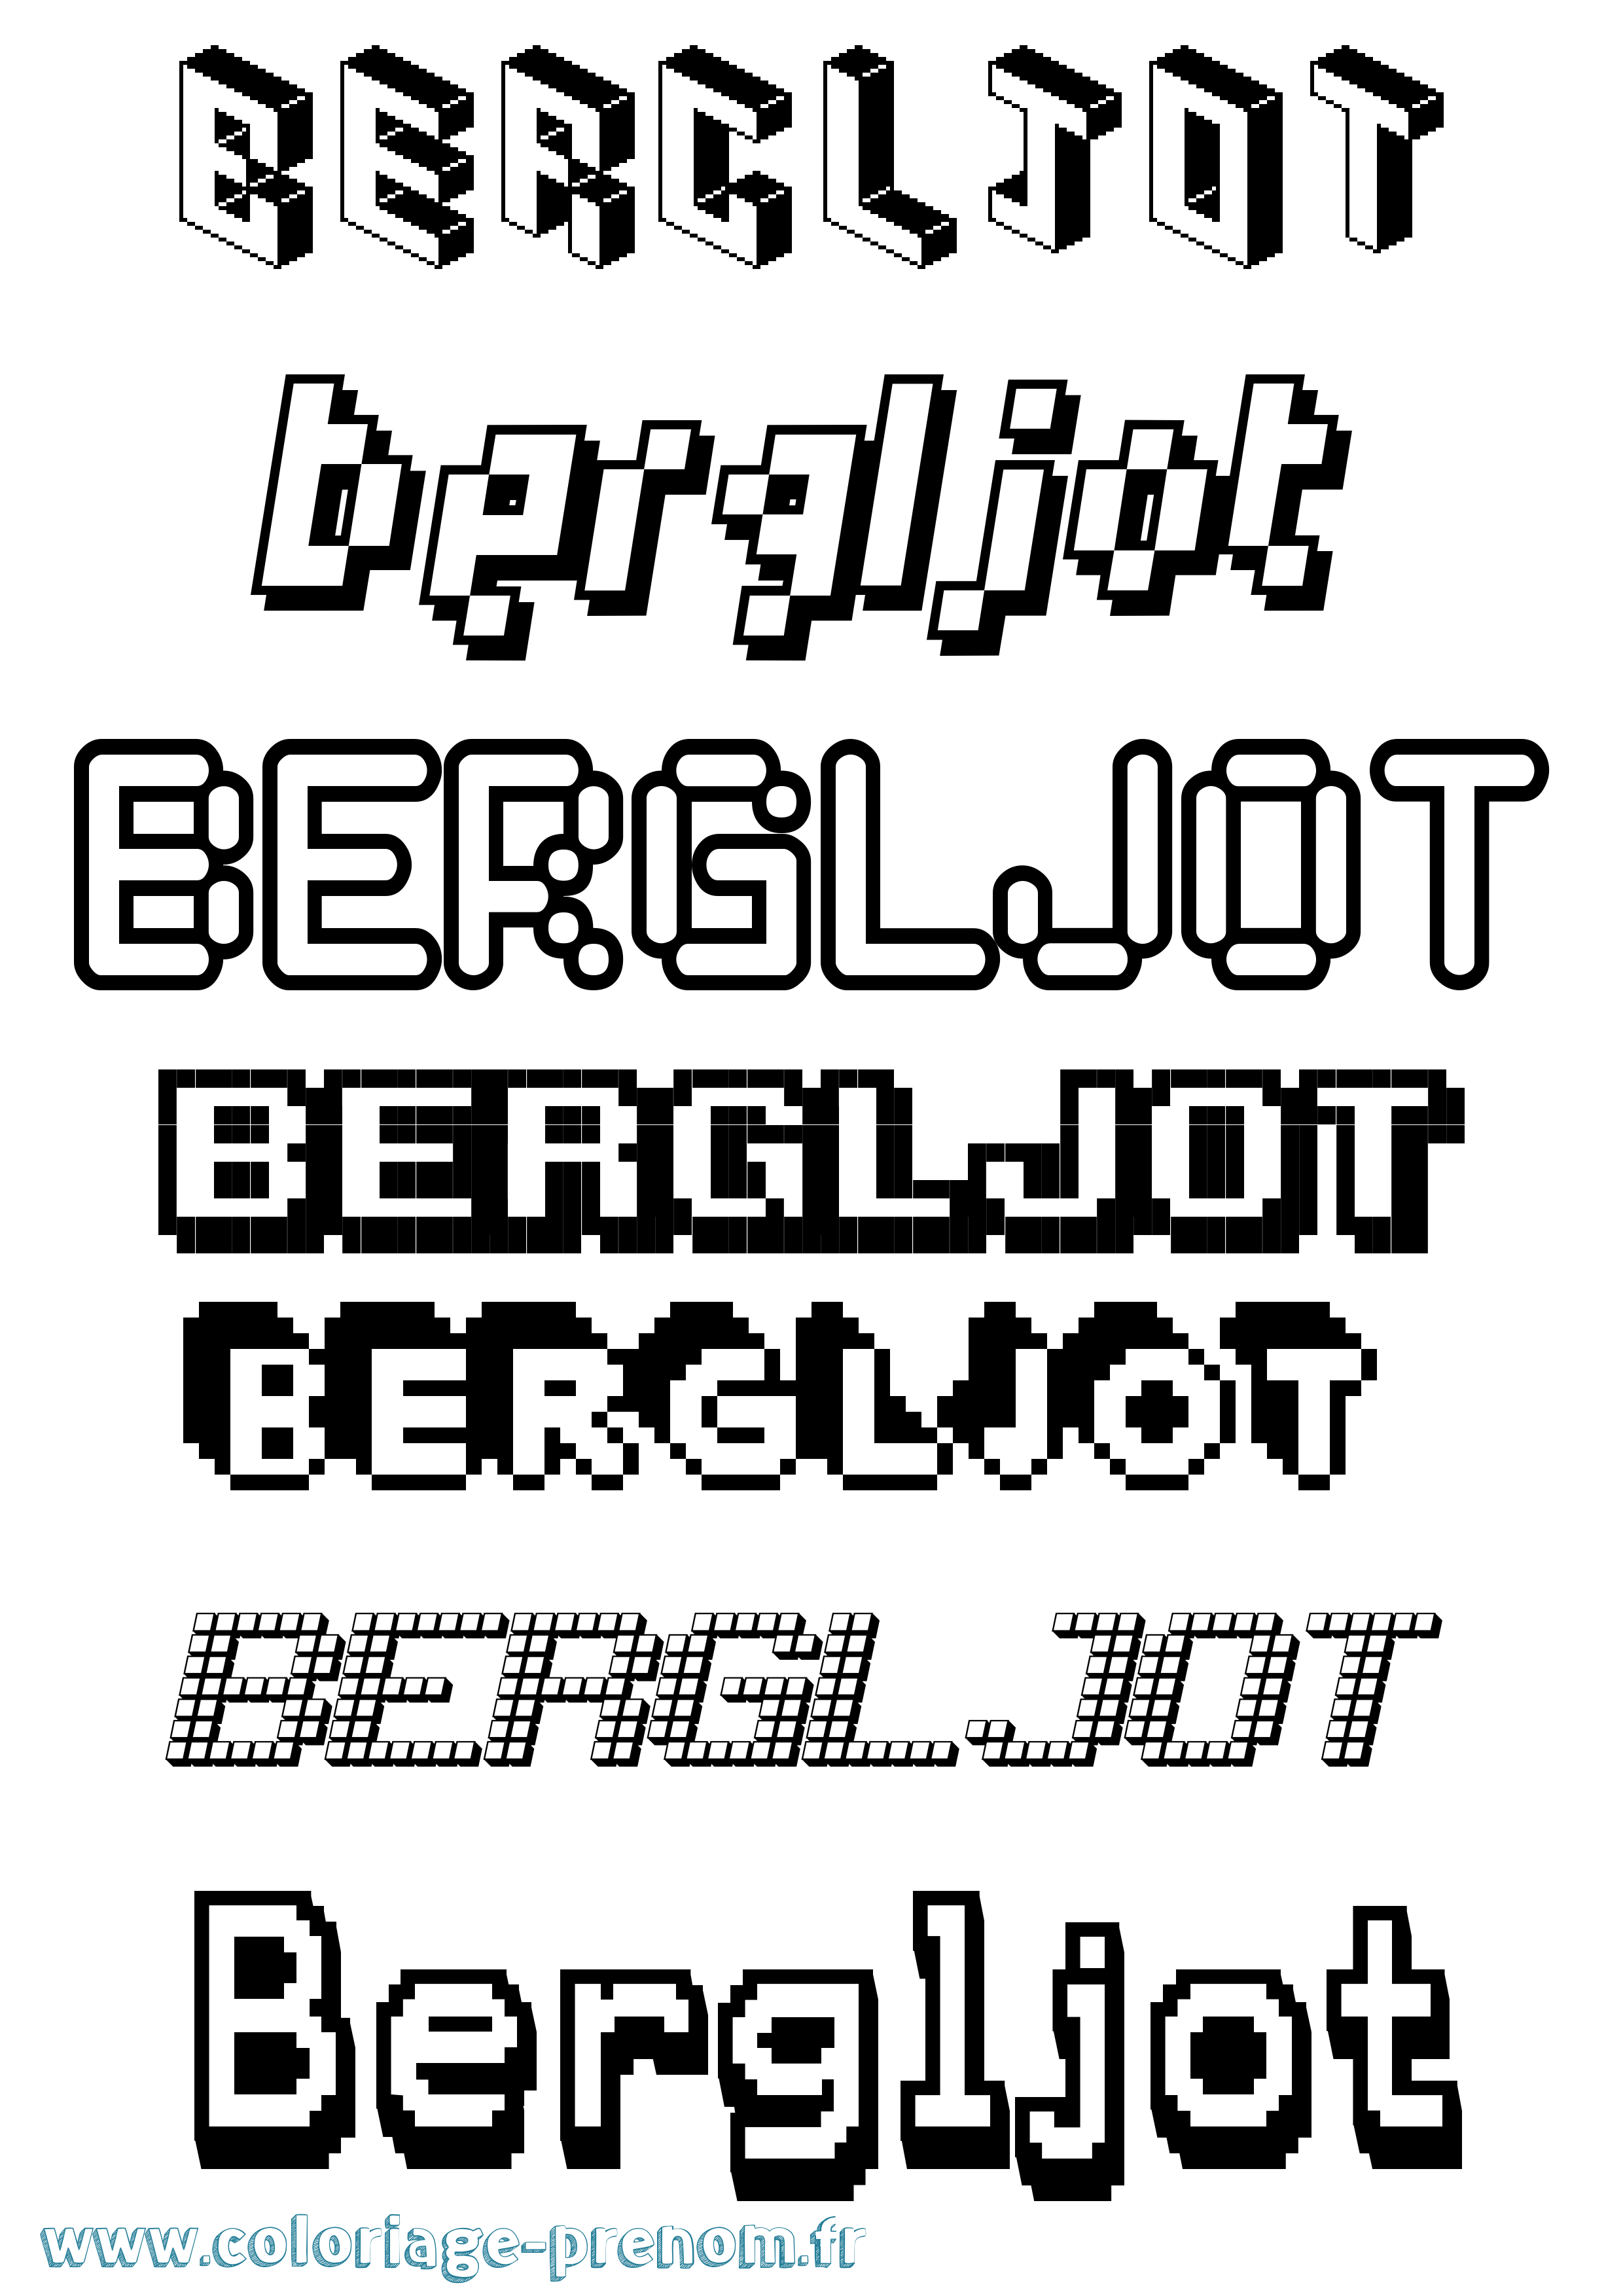 Coloriage prénom Bergljot Pixel